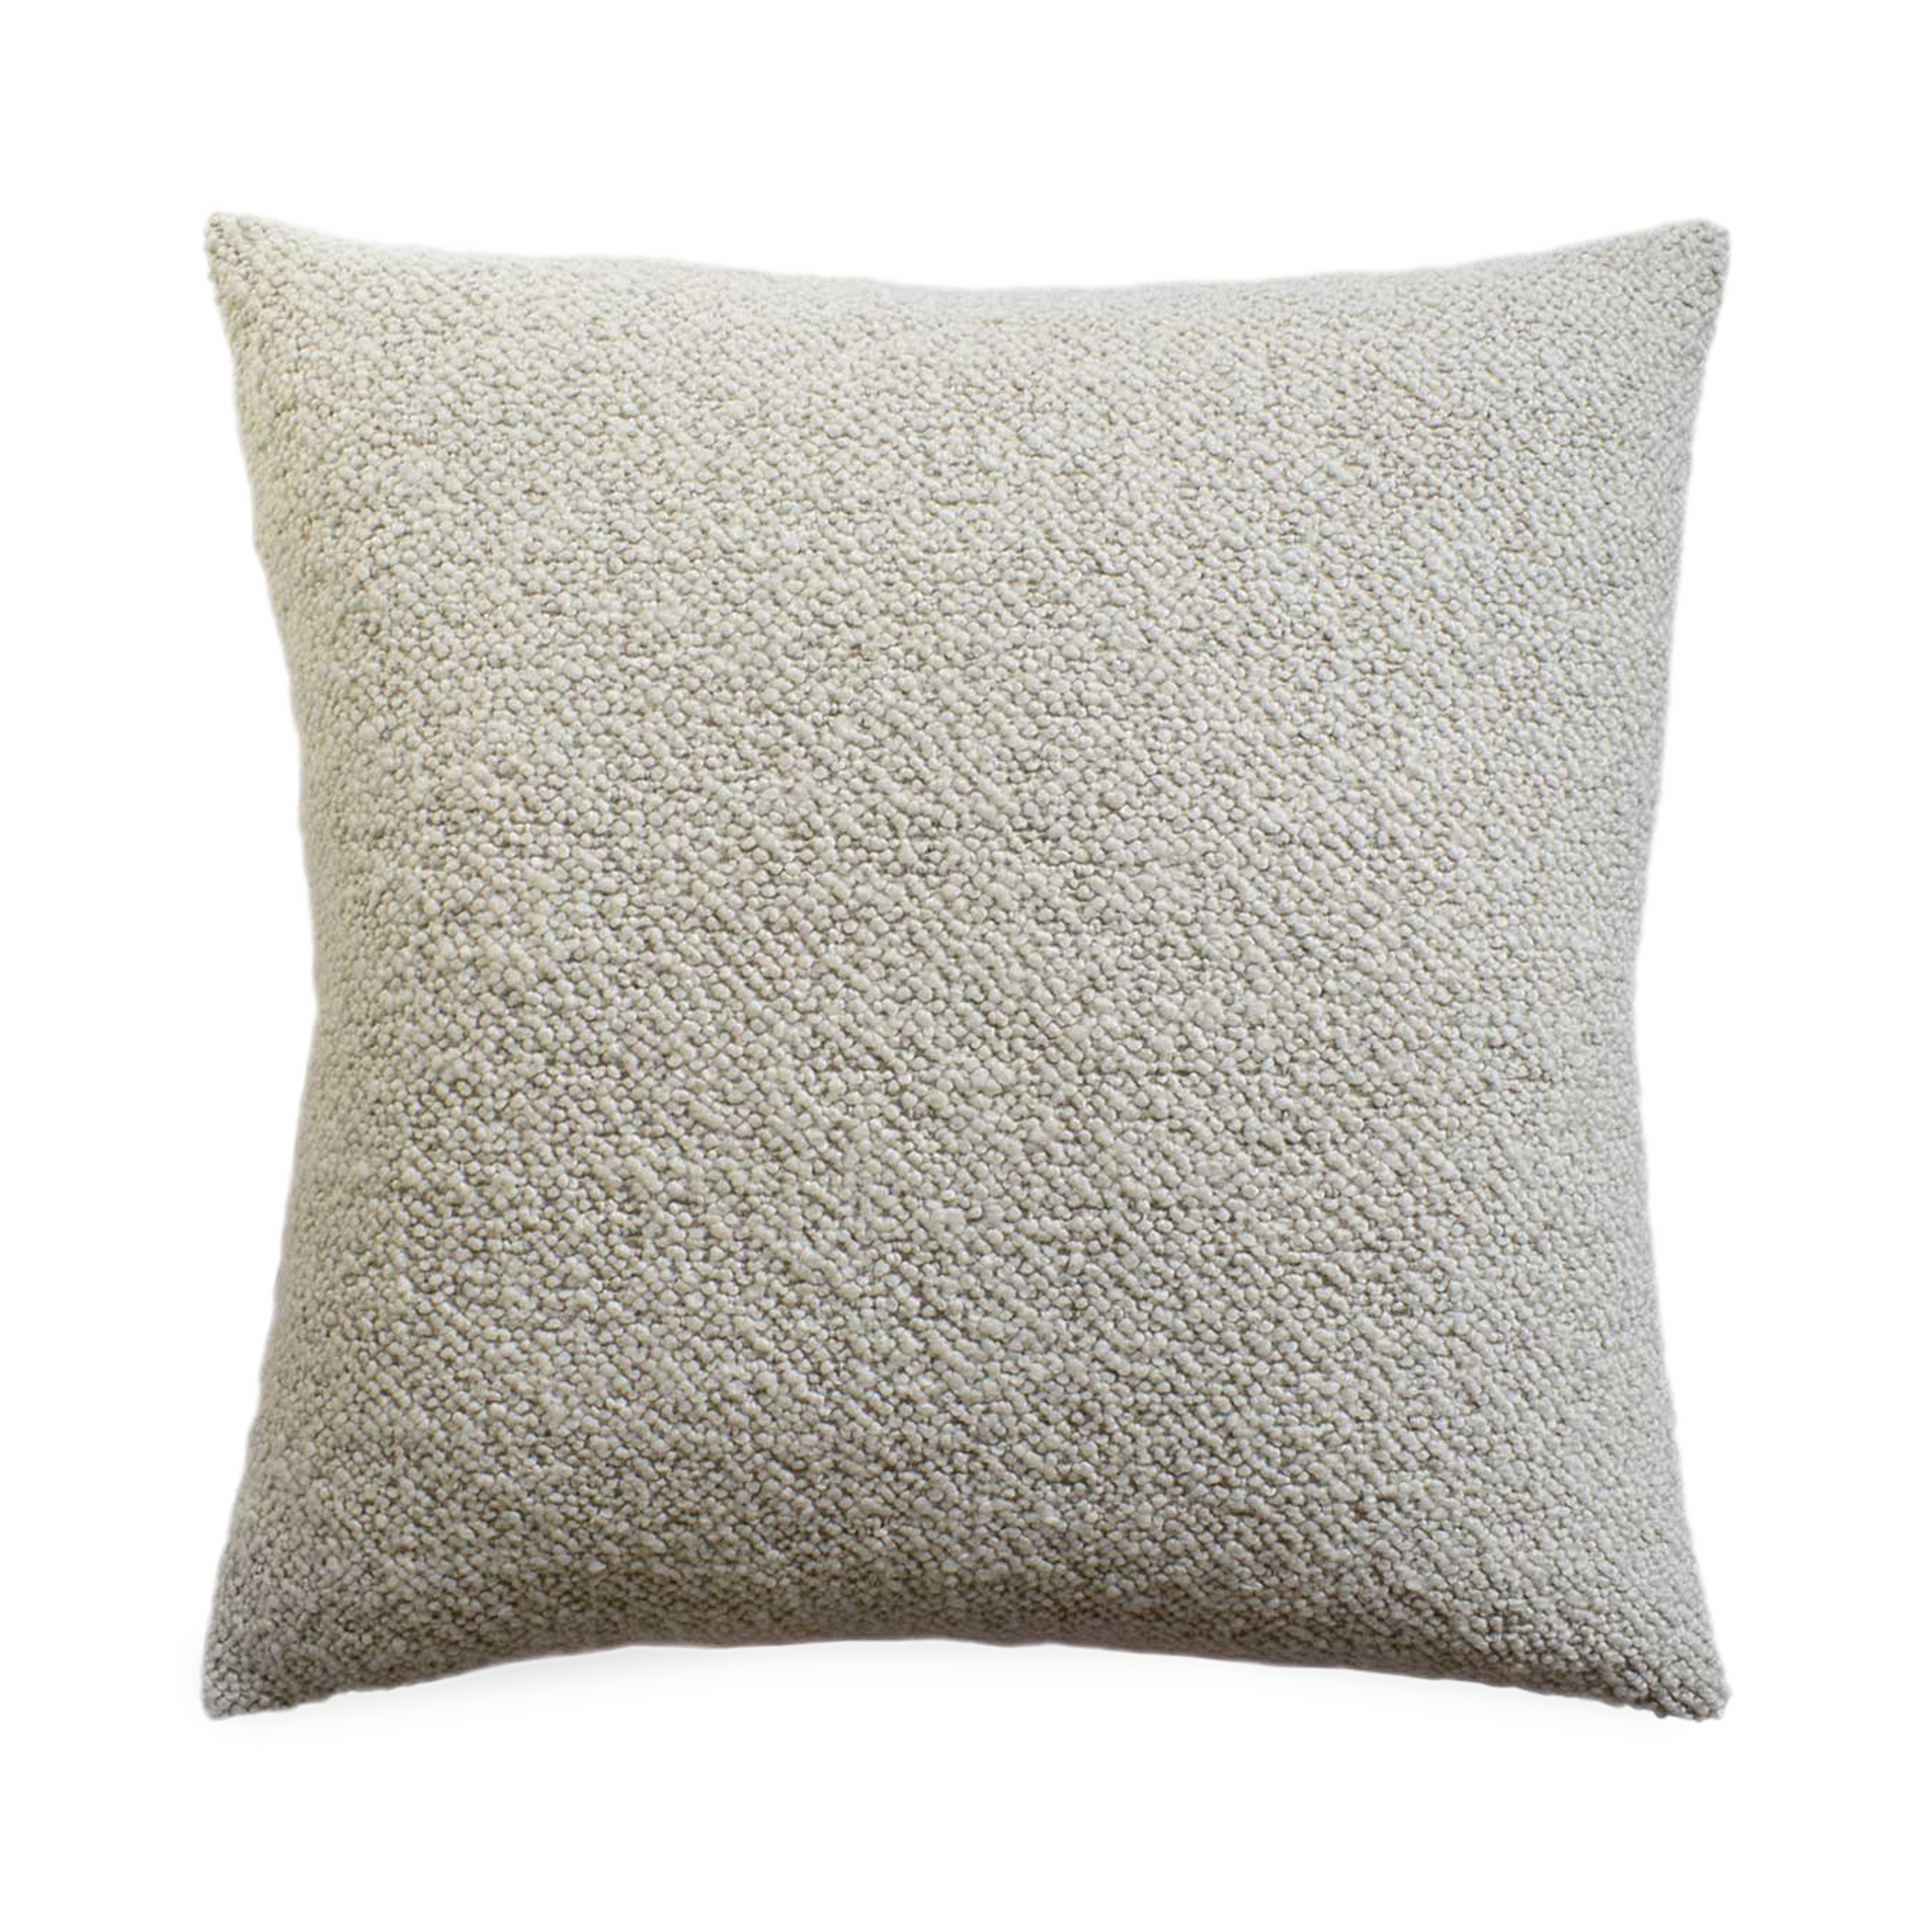 The Tasmin pillow features a plush texture and monocromatic palette.